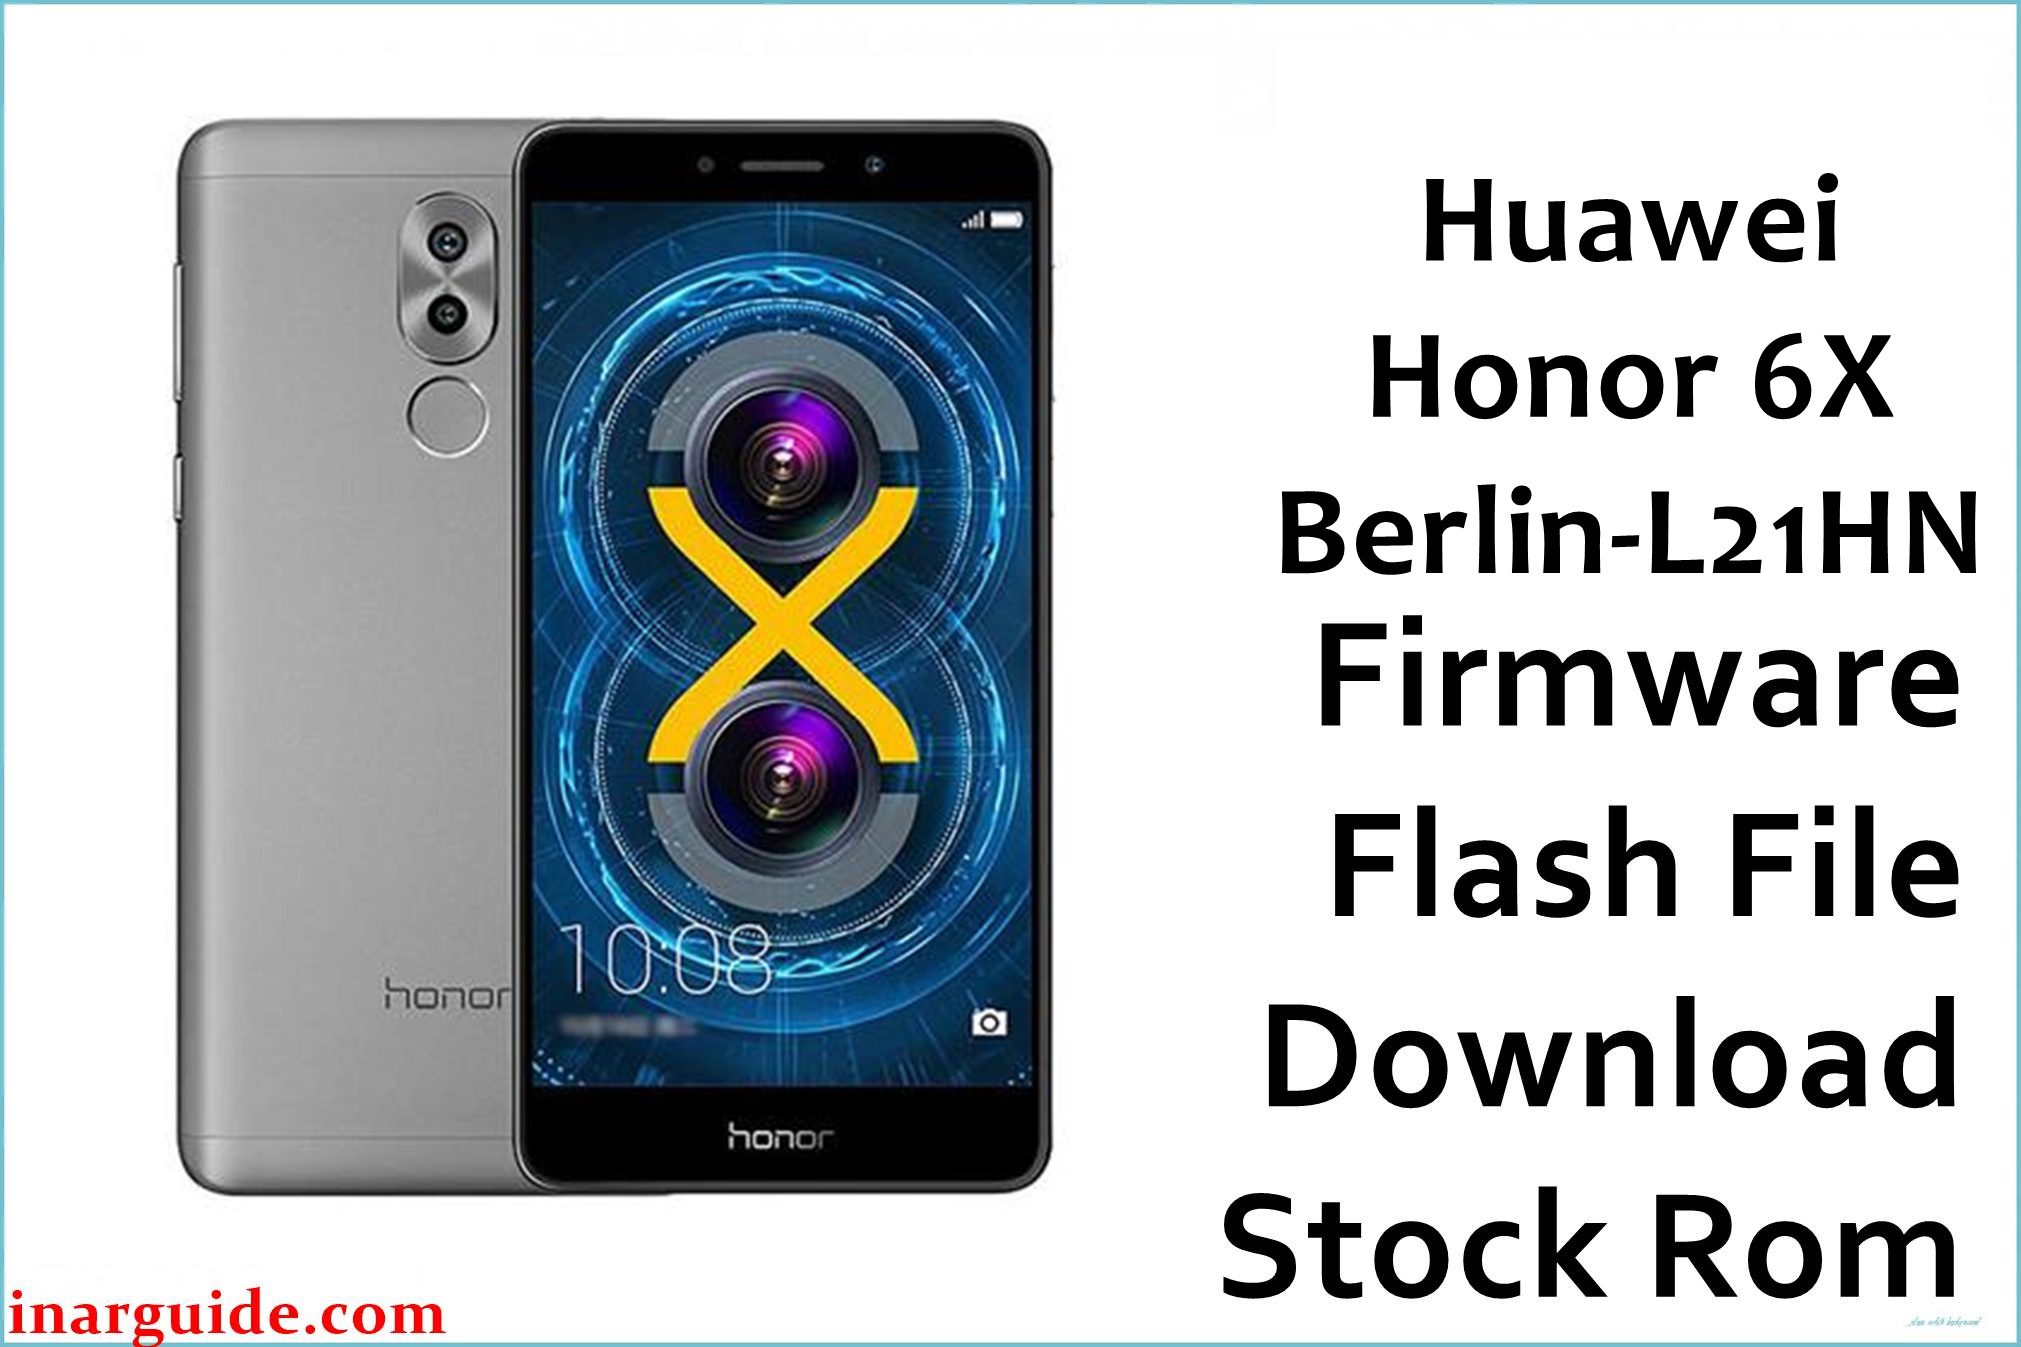 Huawei Honor 6X Berlin L21HN